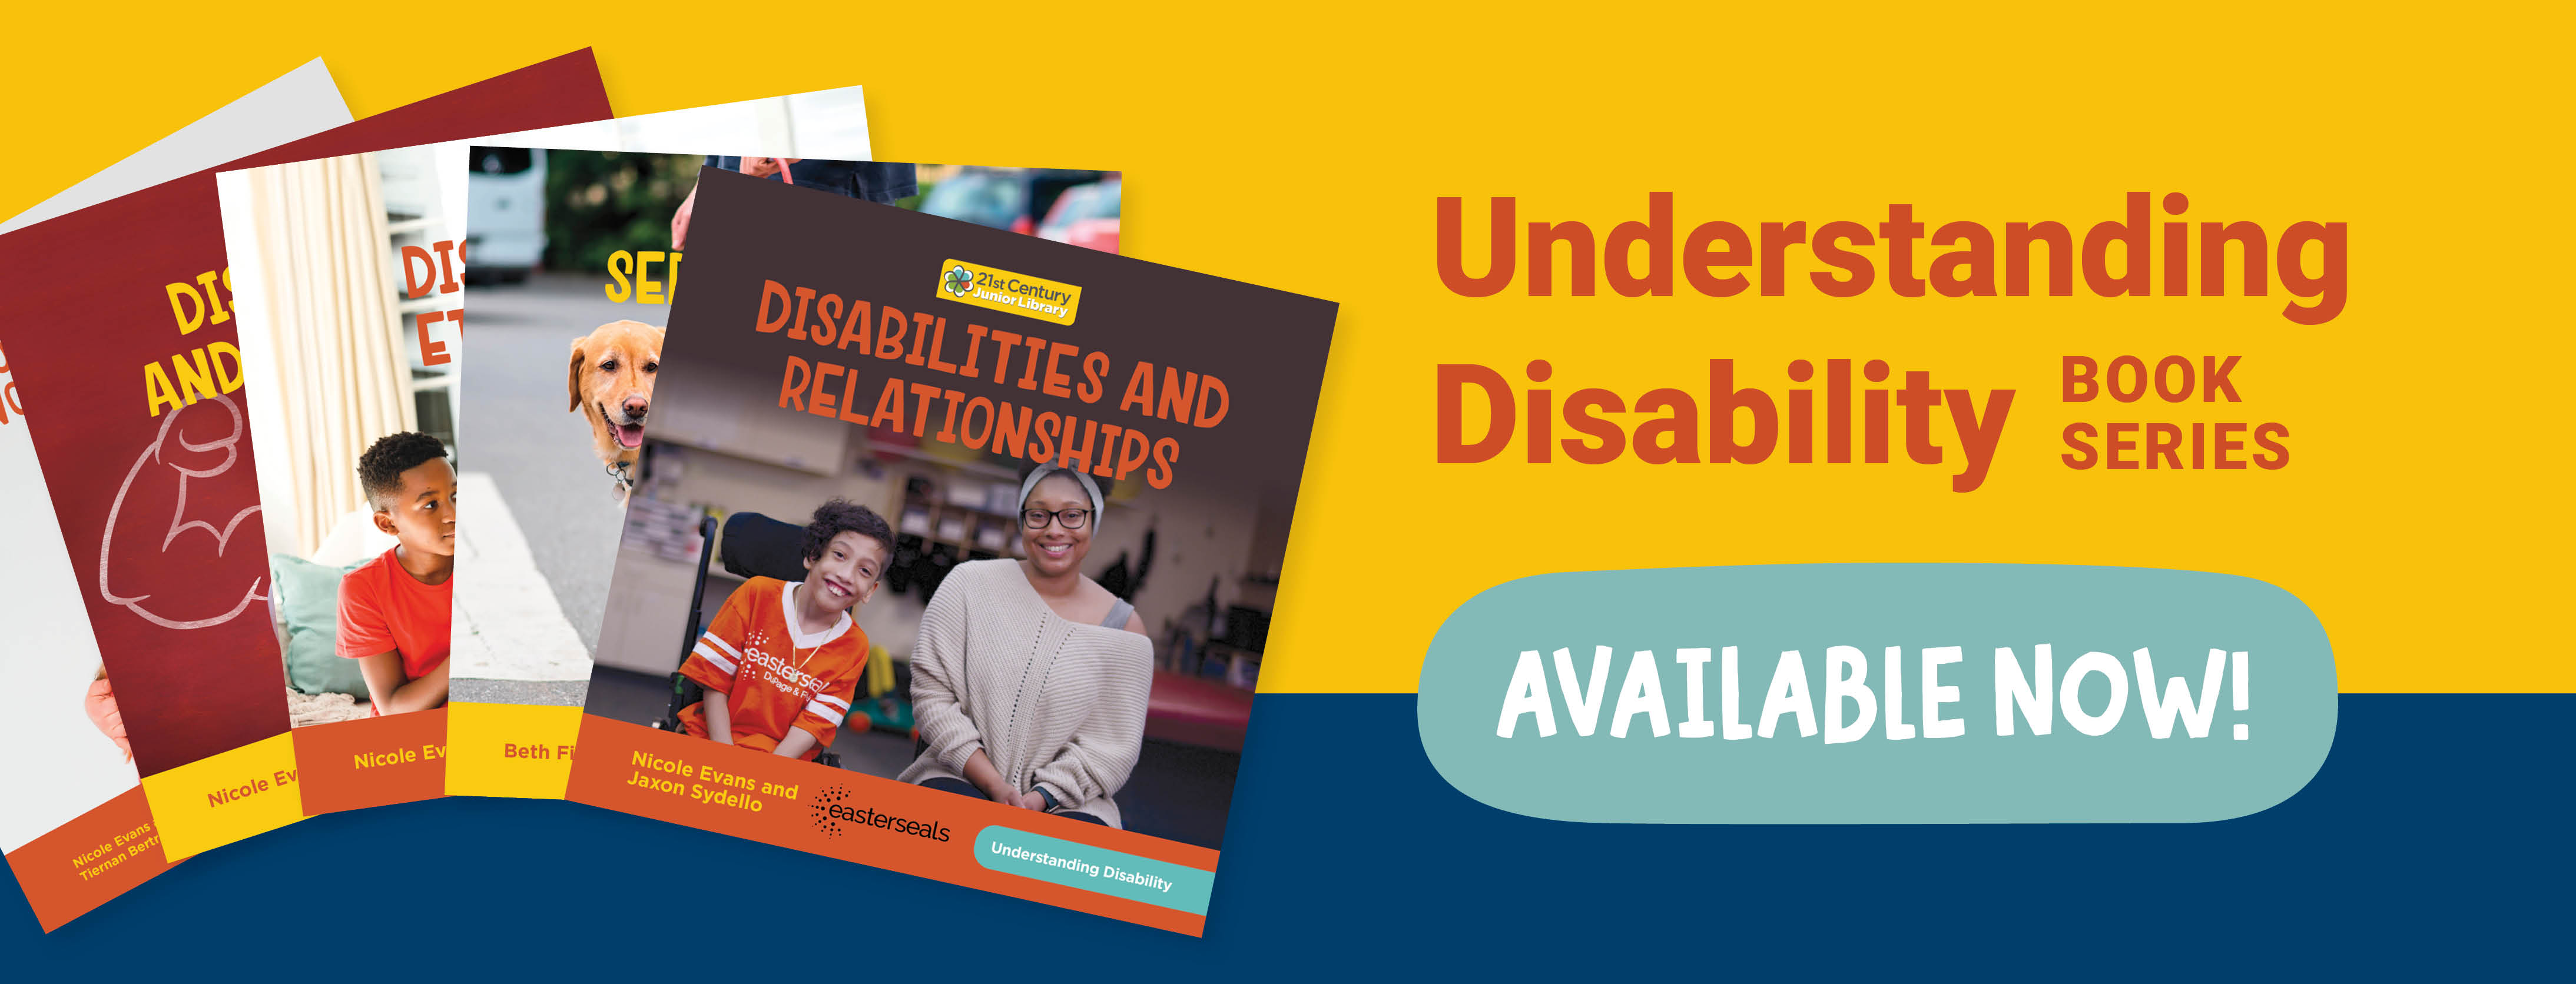 Understanding Disability Book Series